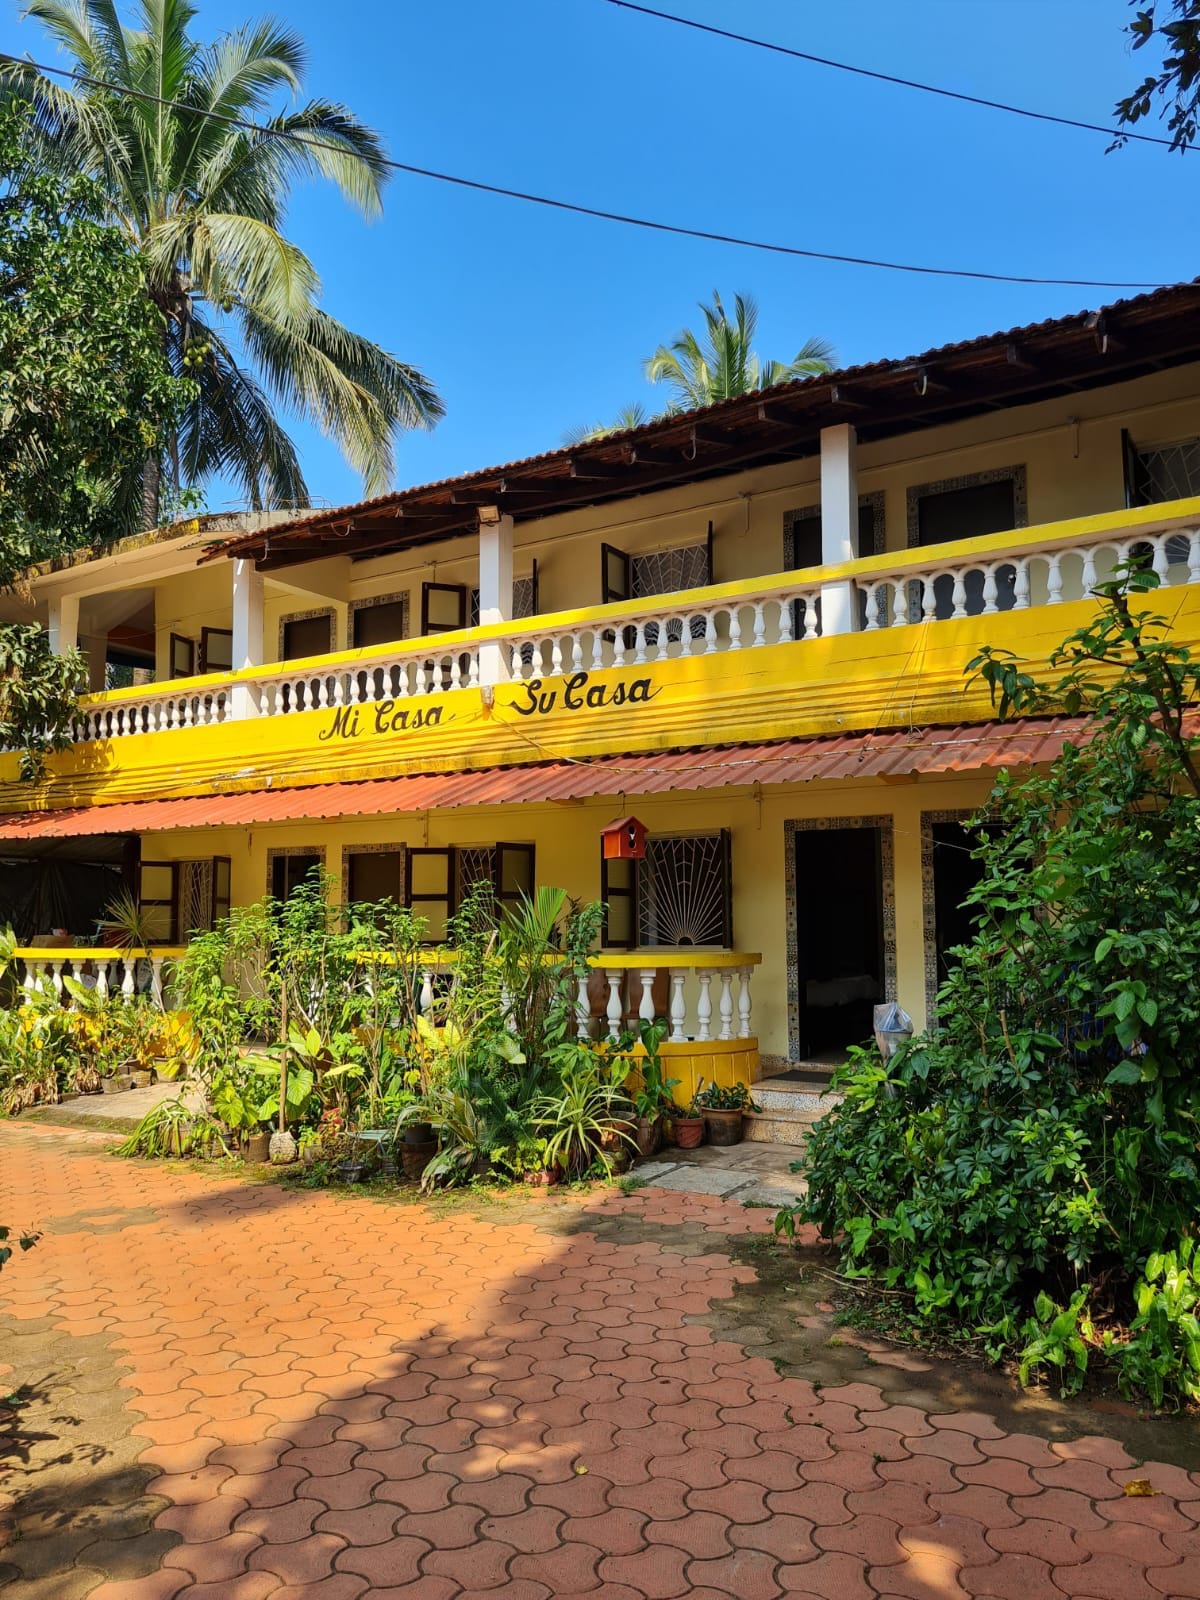 Nostalgic Goa Homestay: Authentic Goan Experience